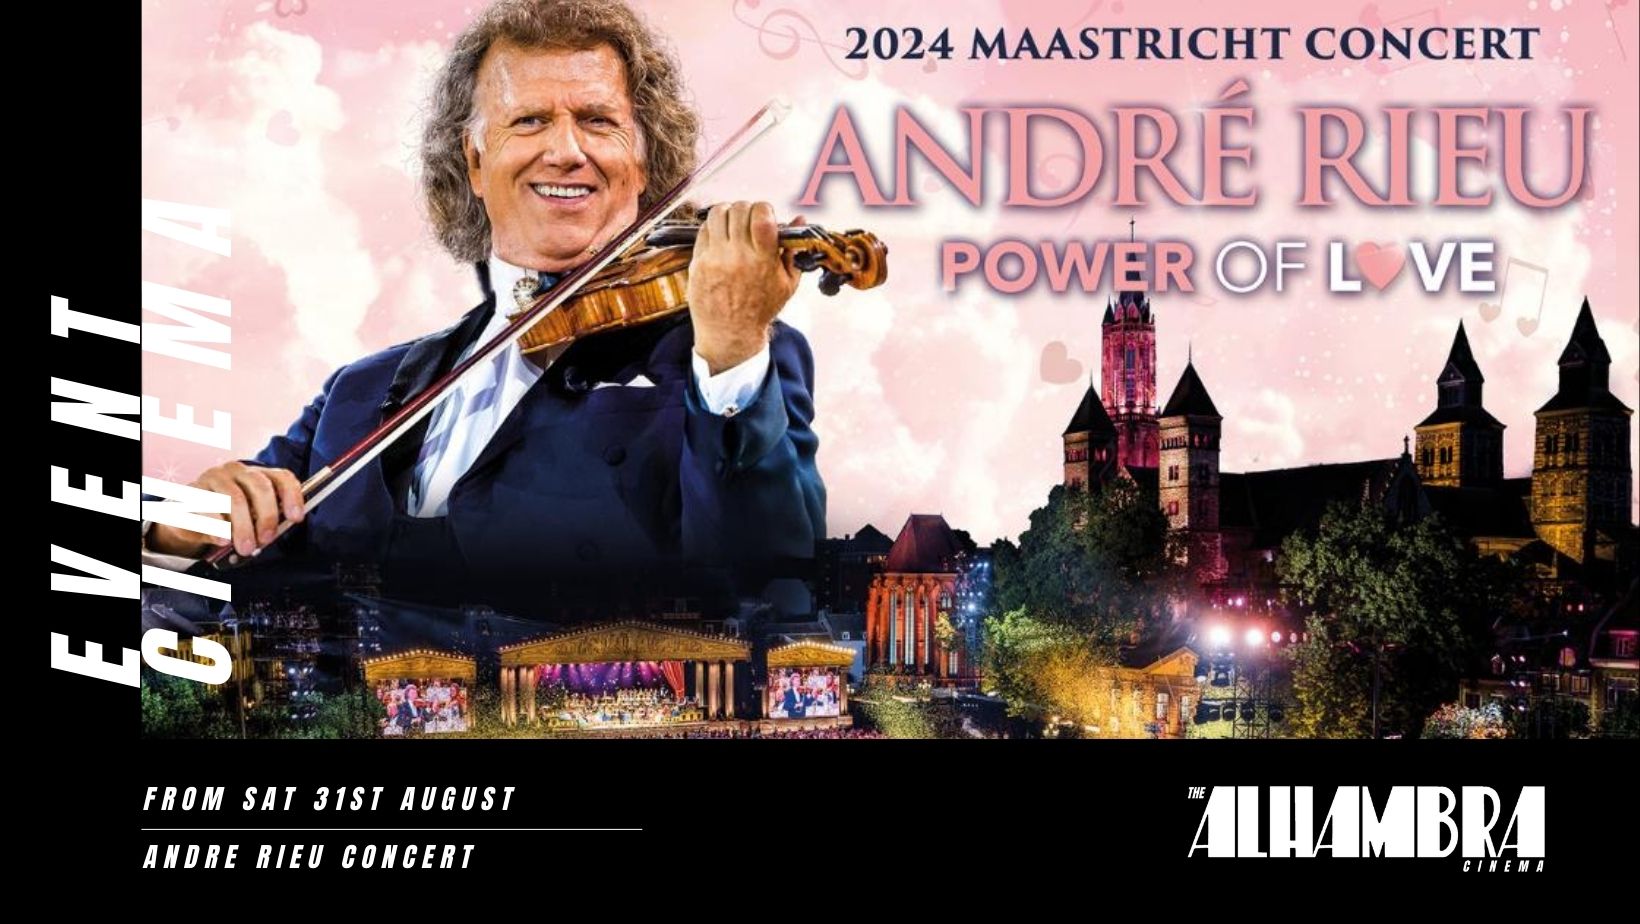 Andre Rieu's 2024 Maastricht Concert - Power Of Love